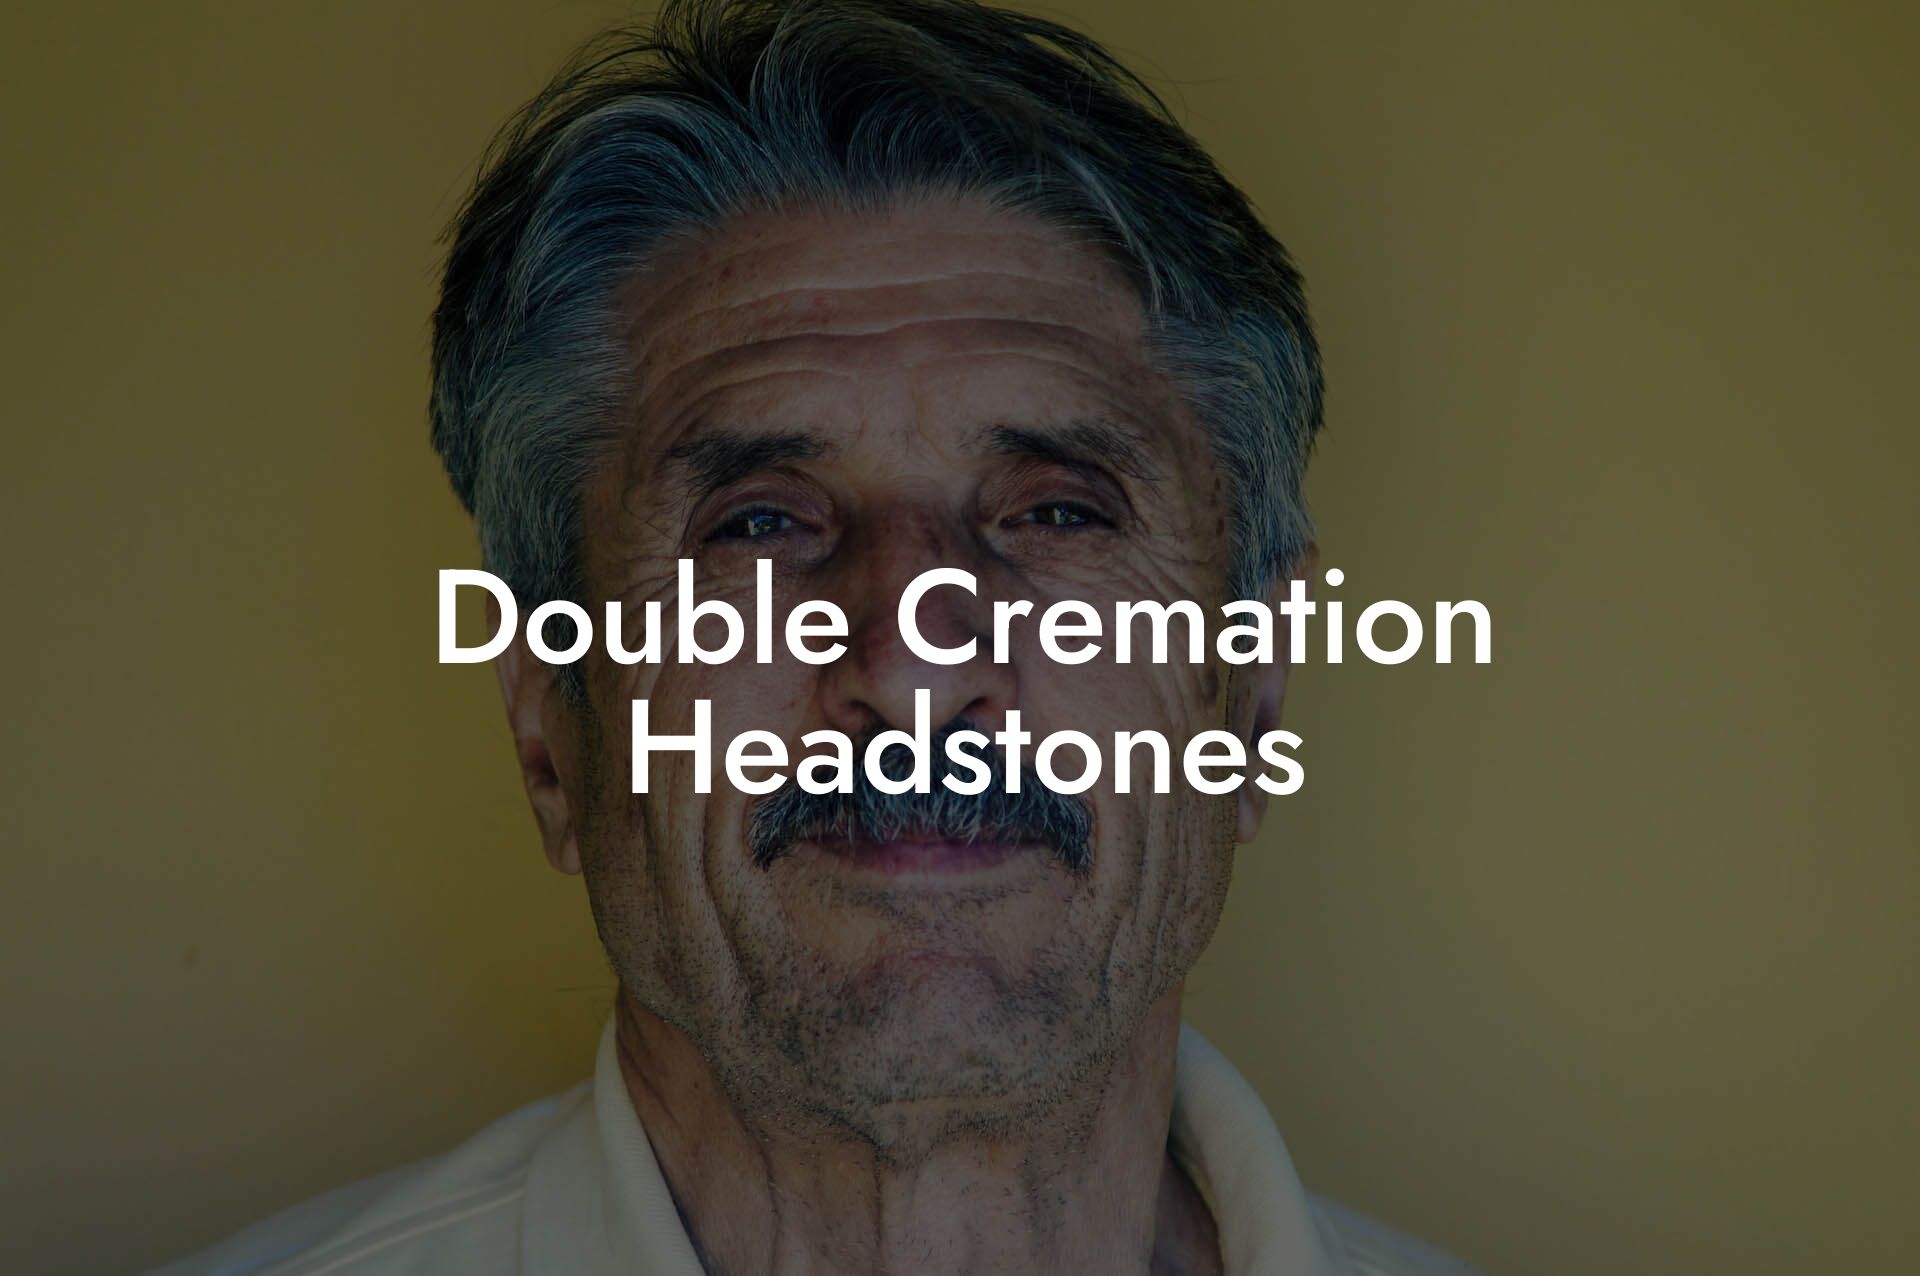 Double Cremation Headstones